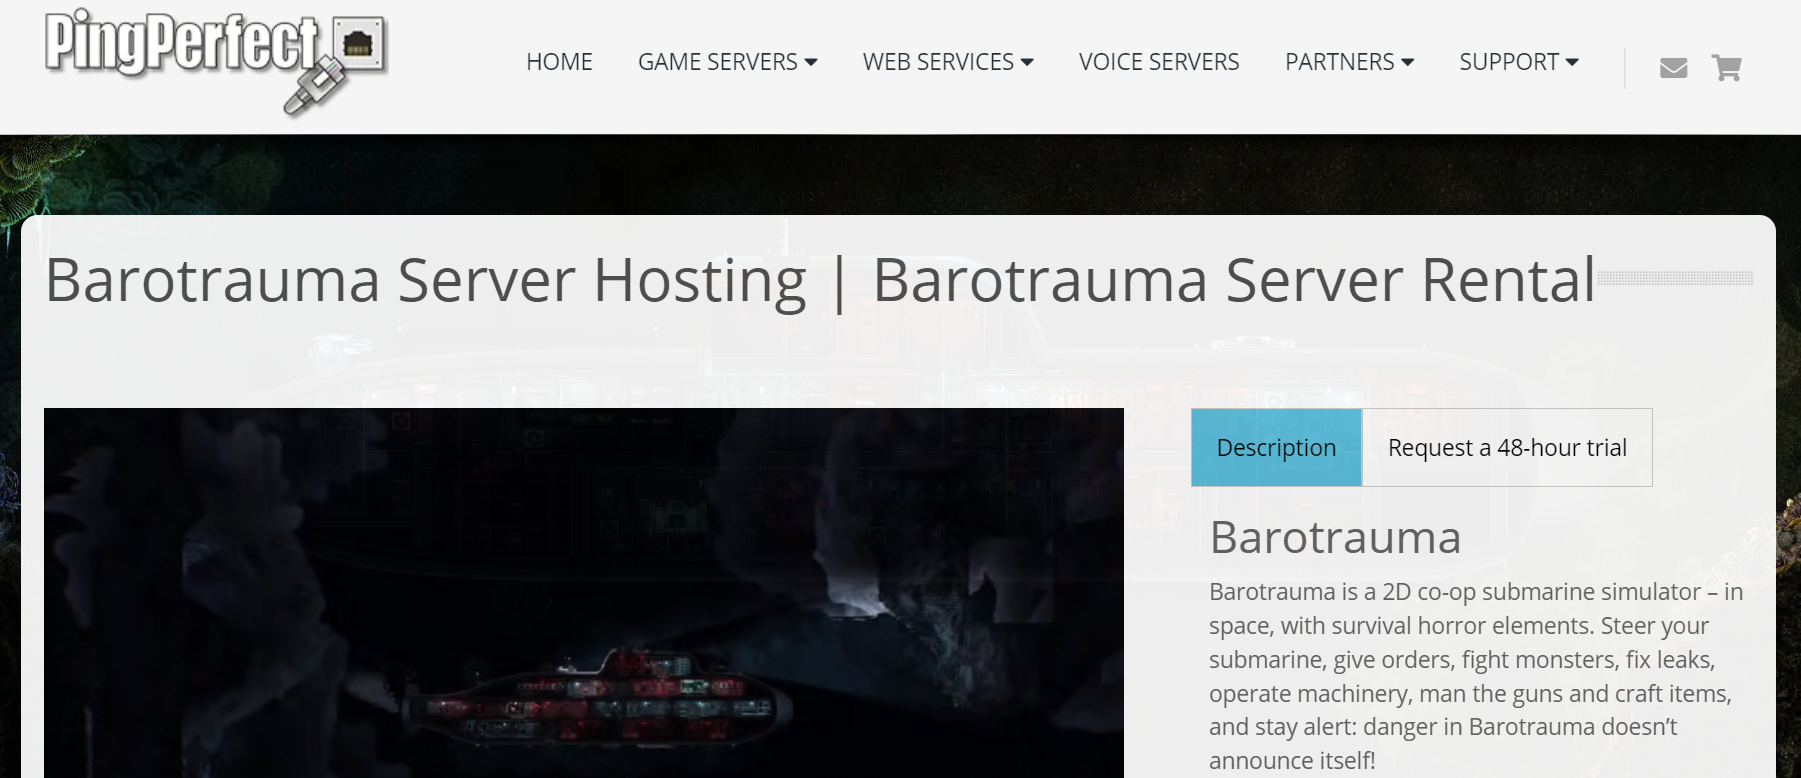 PingPerfect Barotrauma Server Hosting